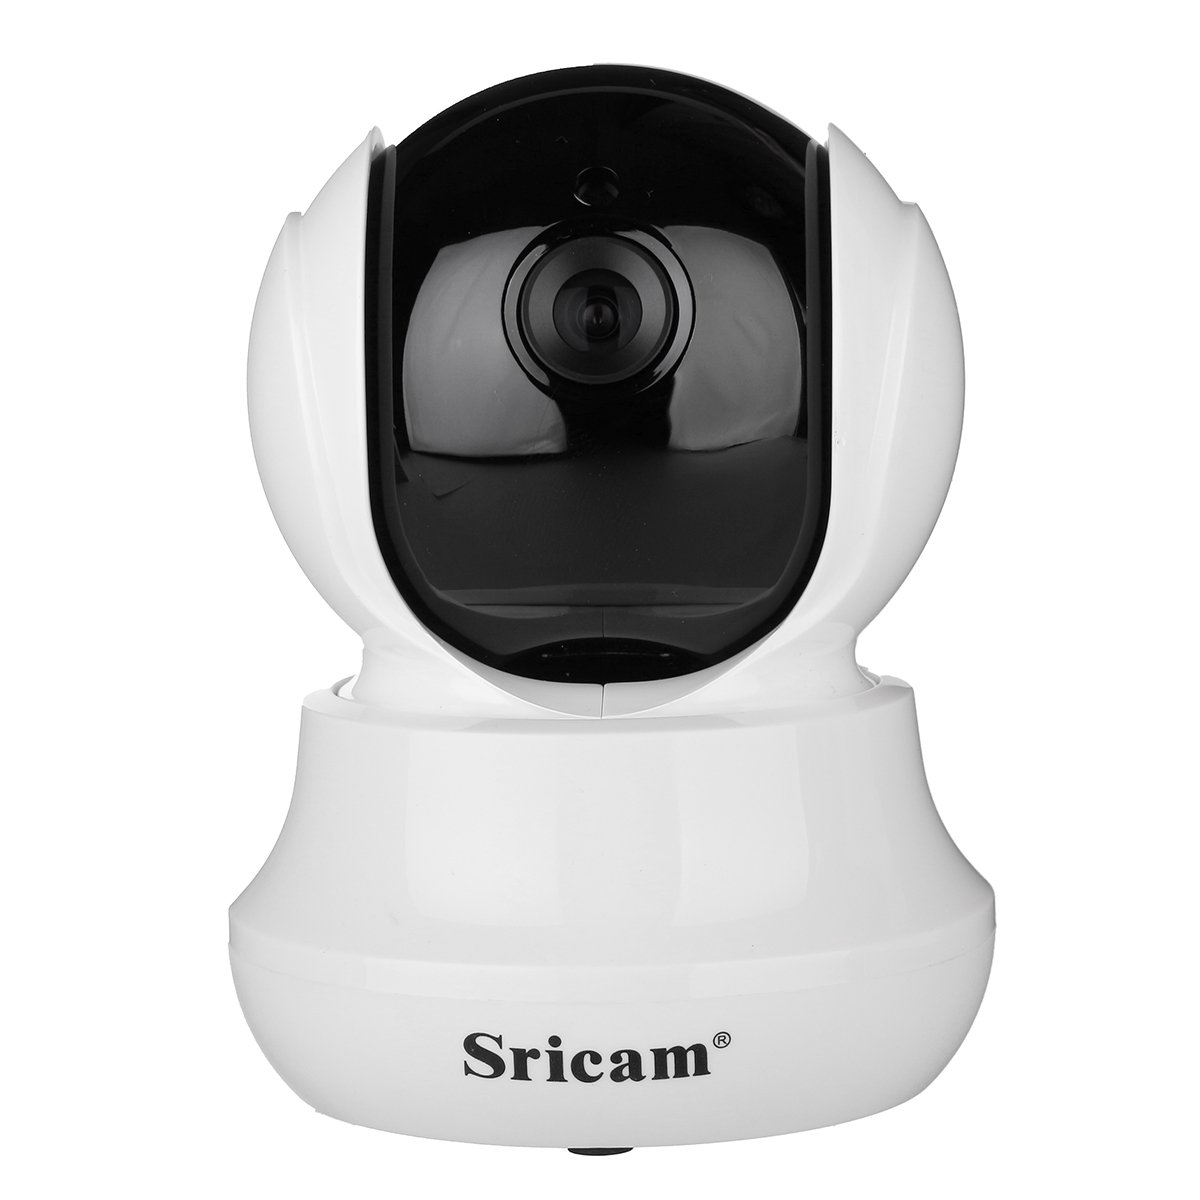 Sricam SP020 Wireless 720P IP Camera Pan&Tilt Home Security PTZ IR Night Vision WiFi Webcam 2